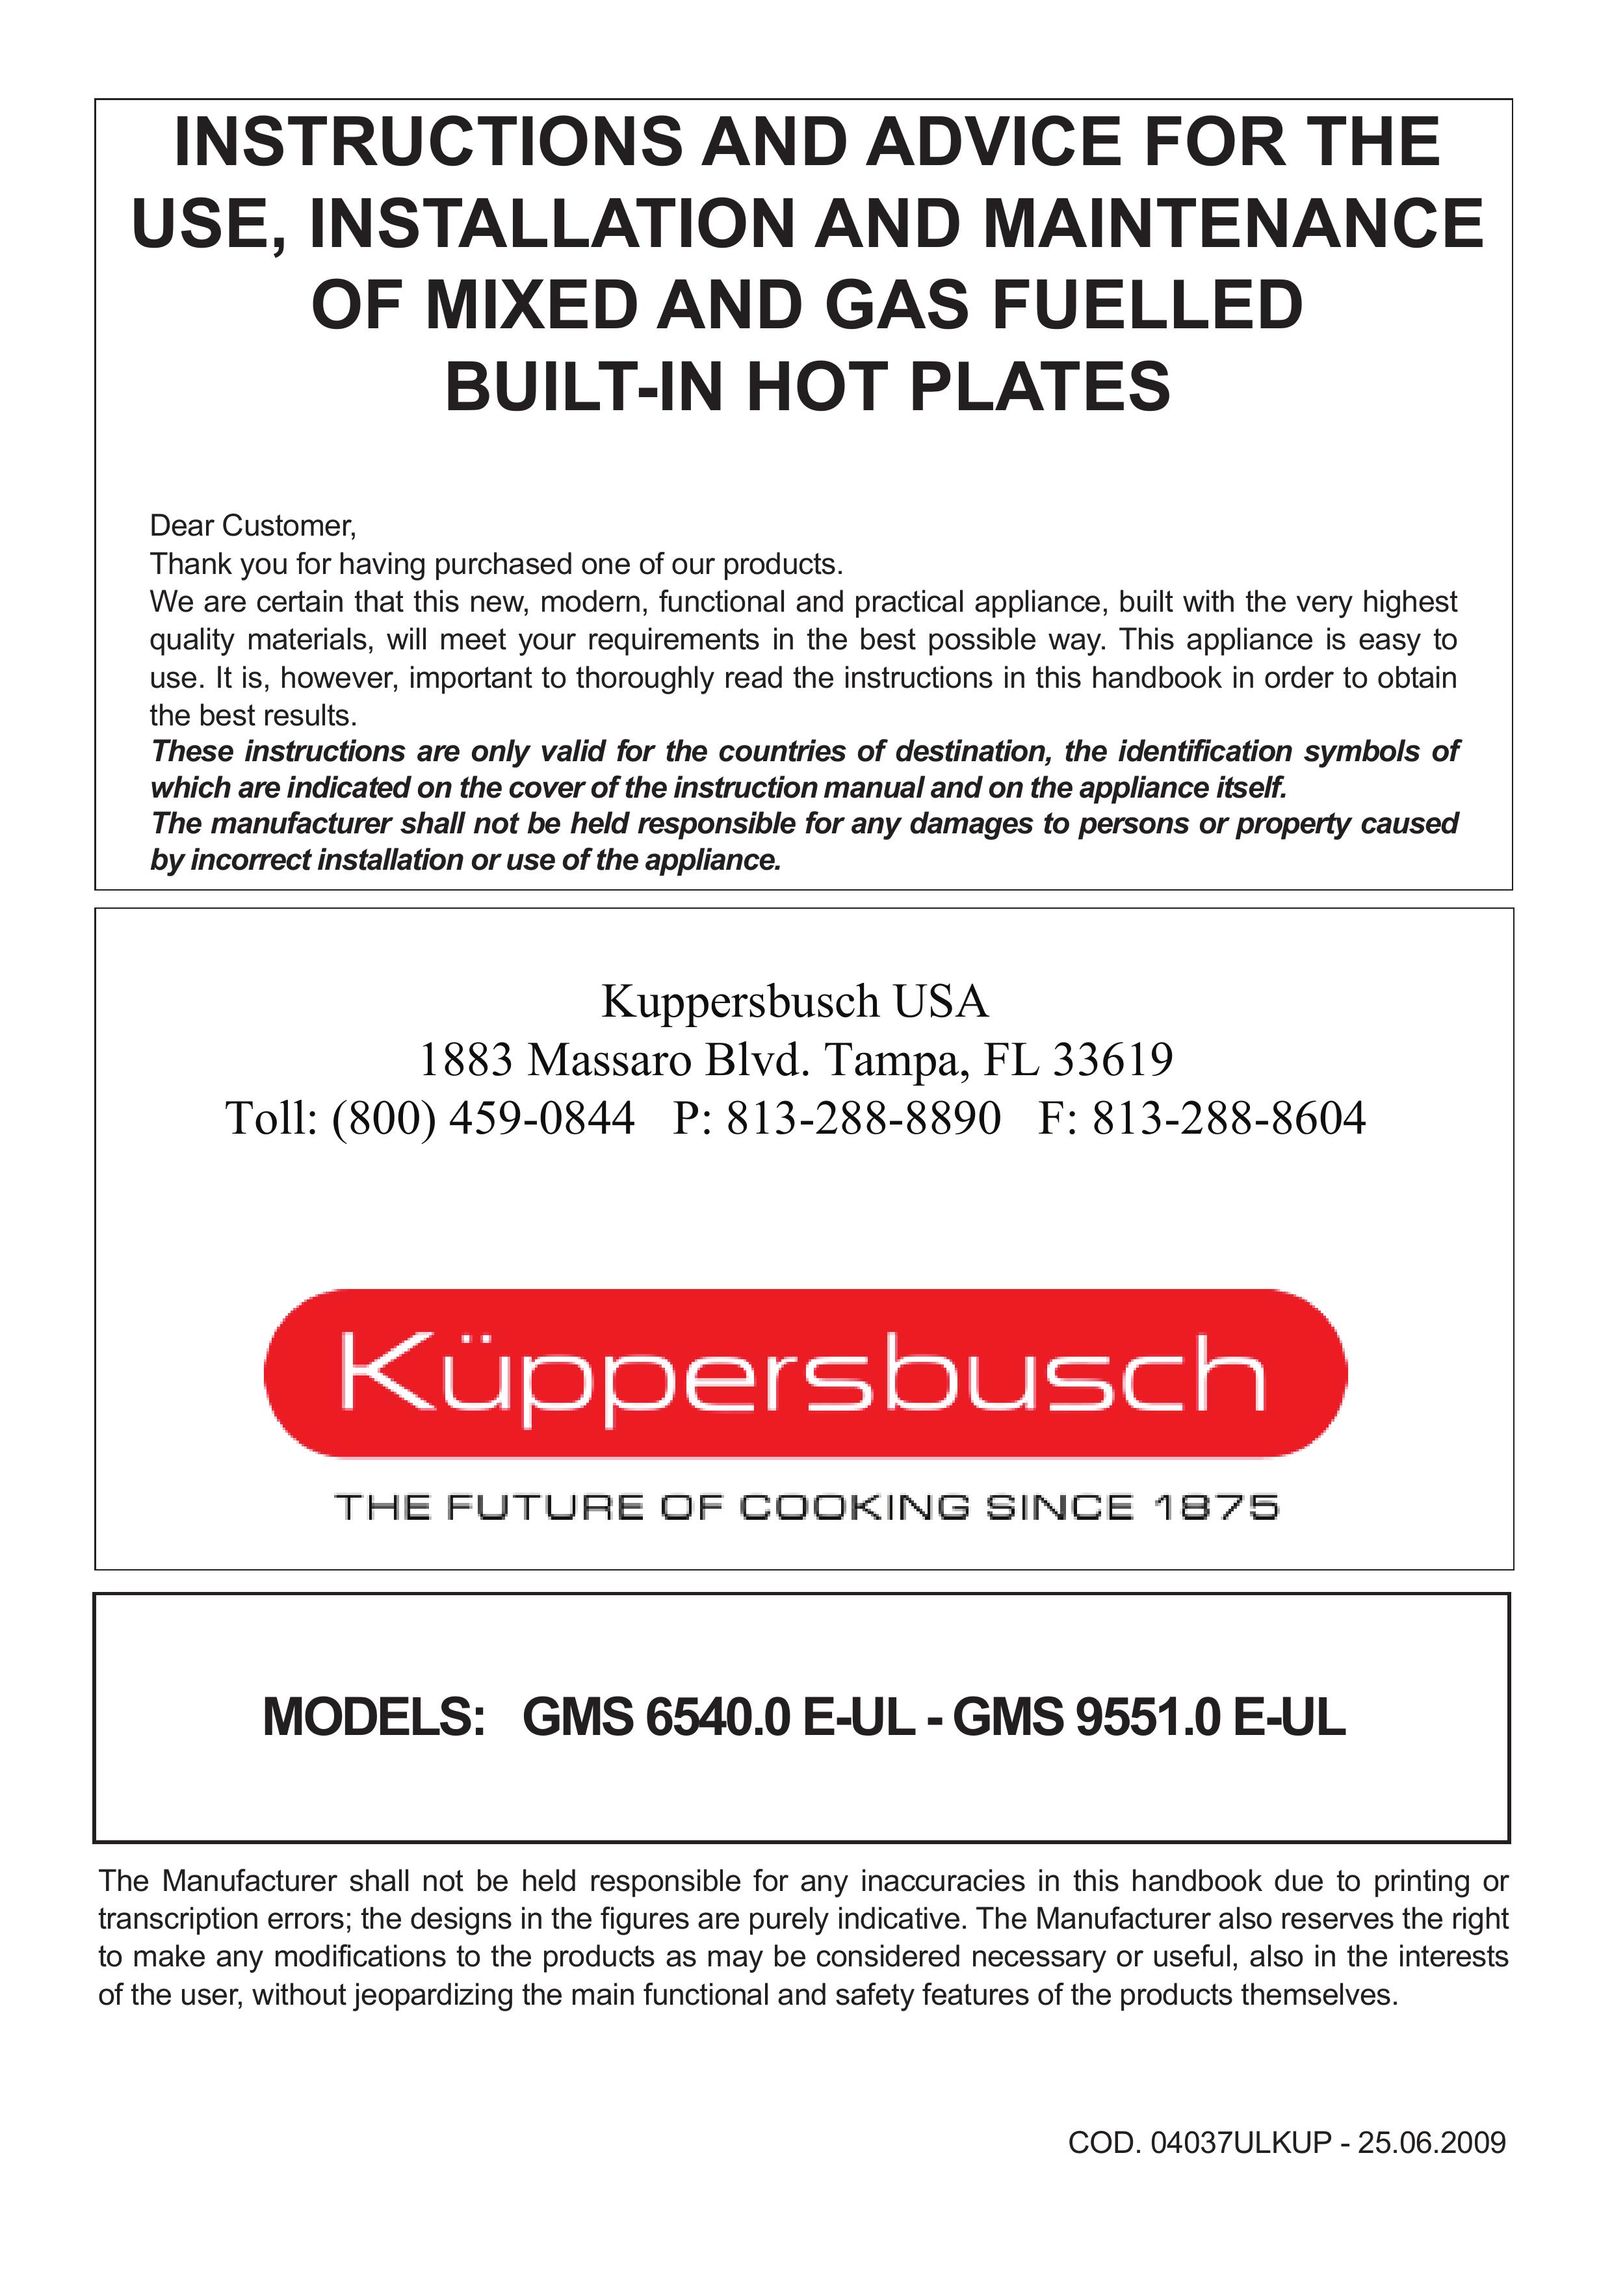 Kuppersbusch USA GMS 6540.0 E-UL Food Warmer User Manual